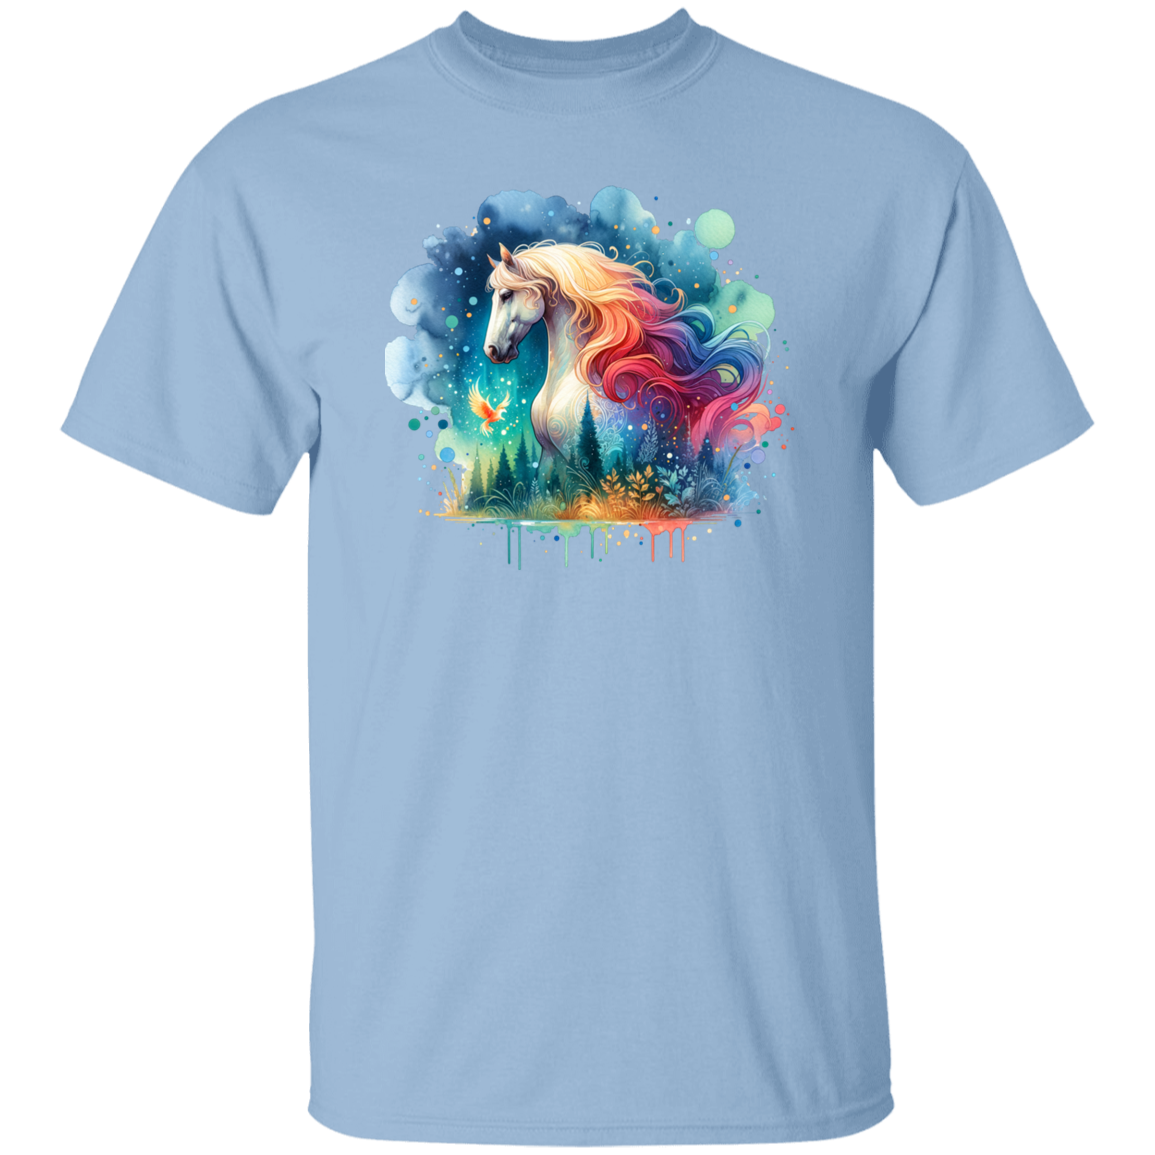 Gentle Horse Spirit - T-shirts, Hoodies and Sweatshirts